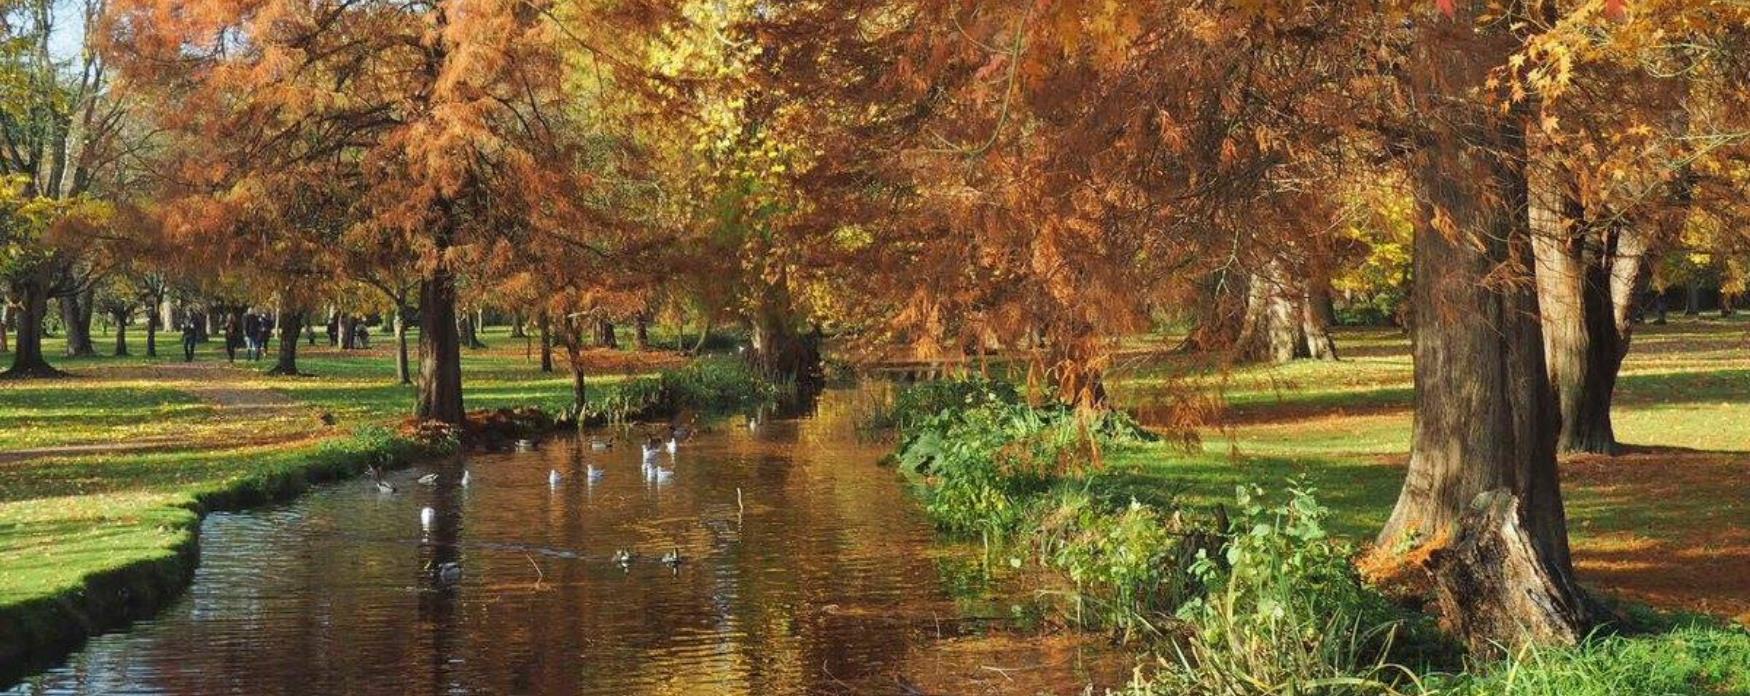 Image of bushy park in autumn